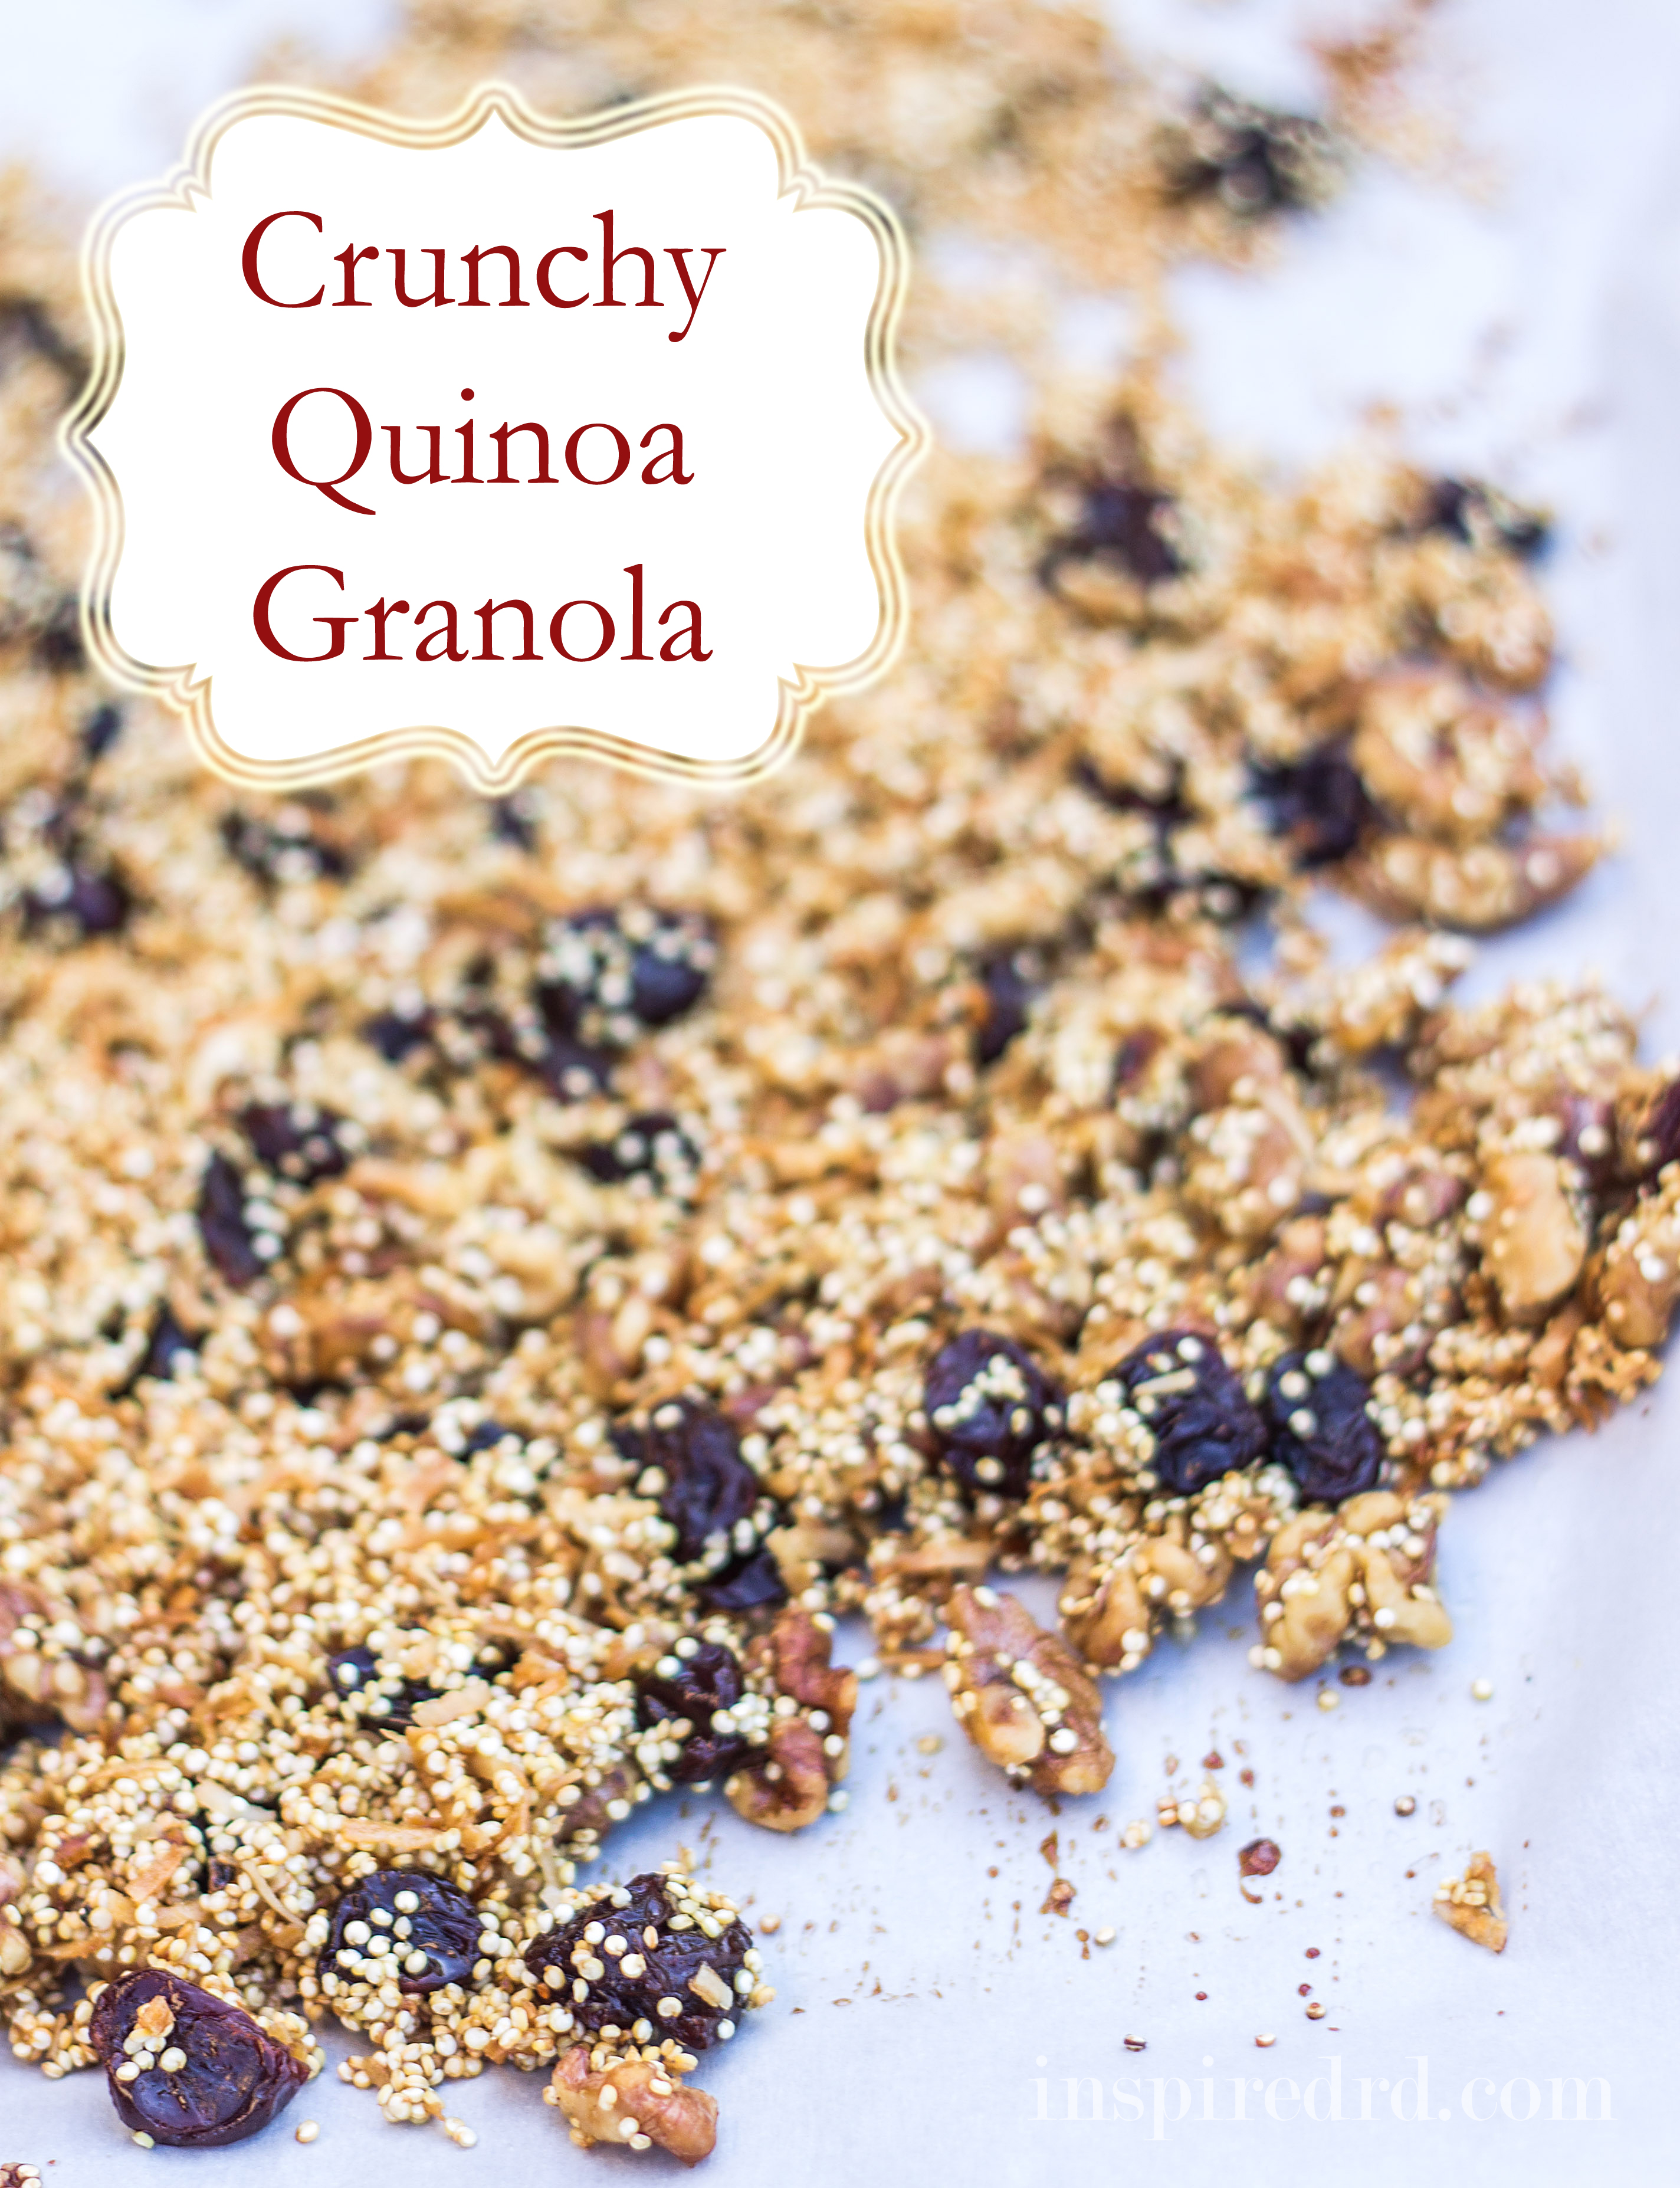 Crunchy Quinoa Granola with walnuts, cherries and coconut. #glutenfree